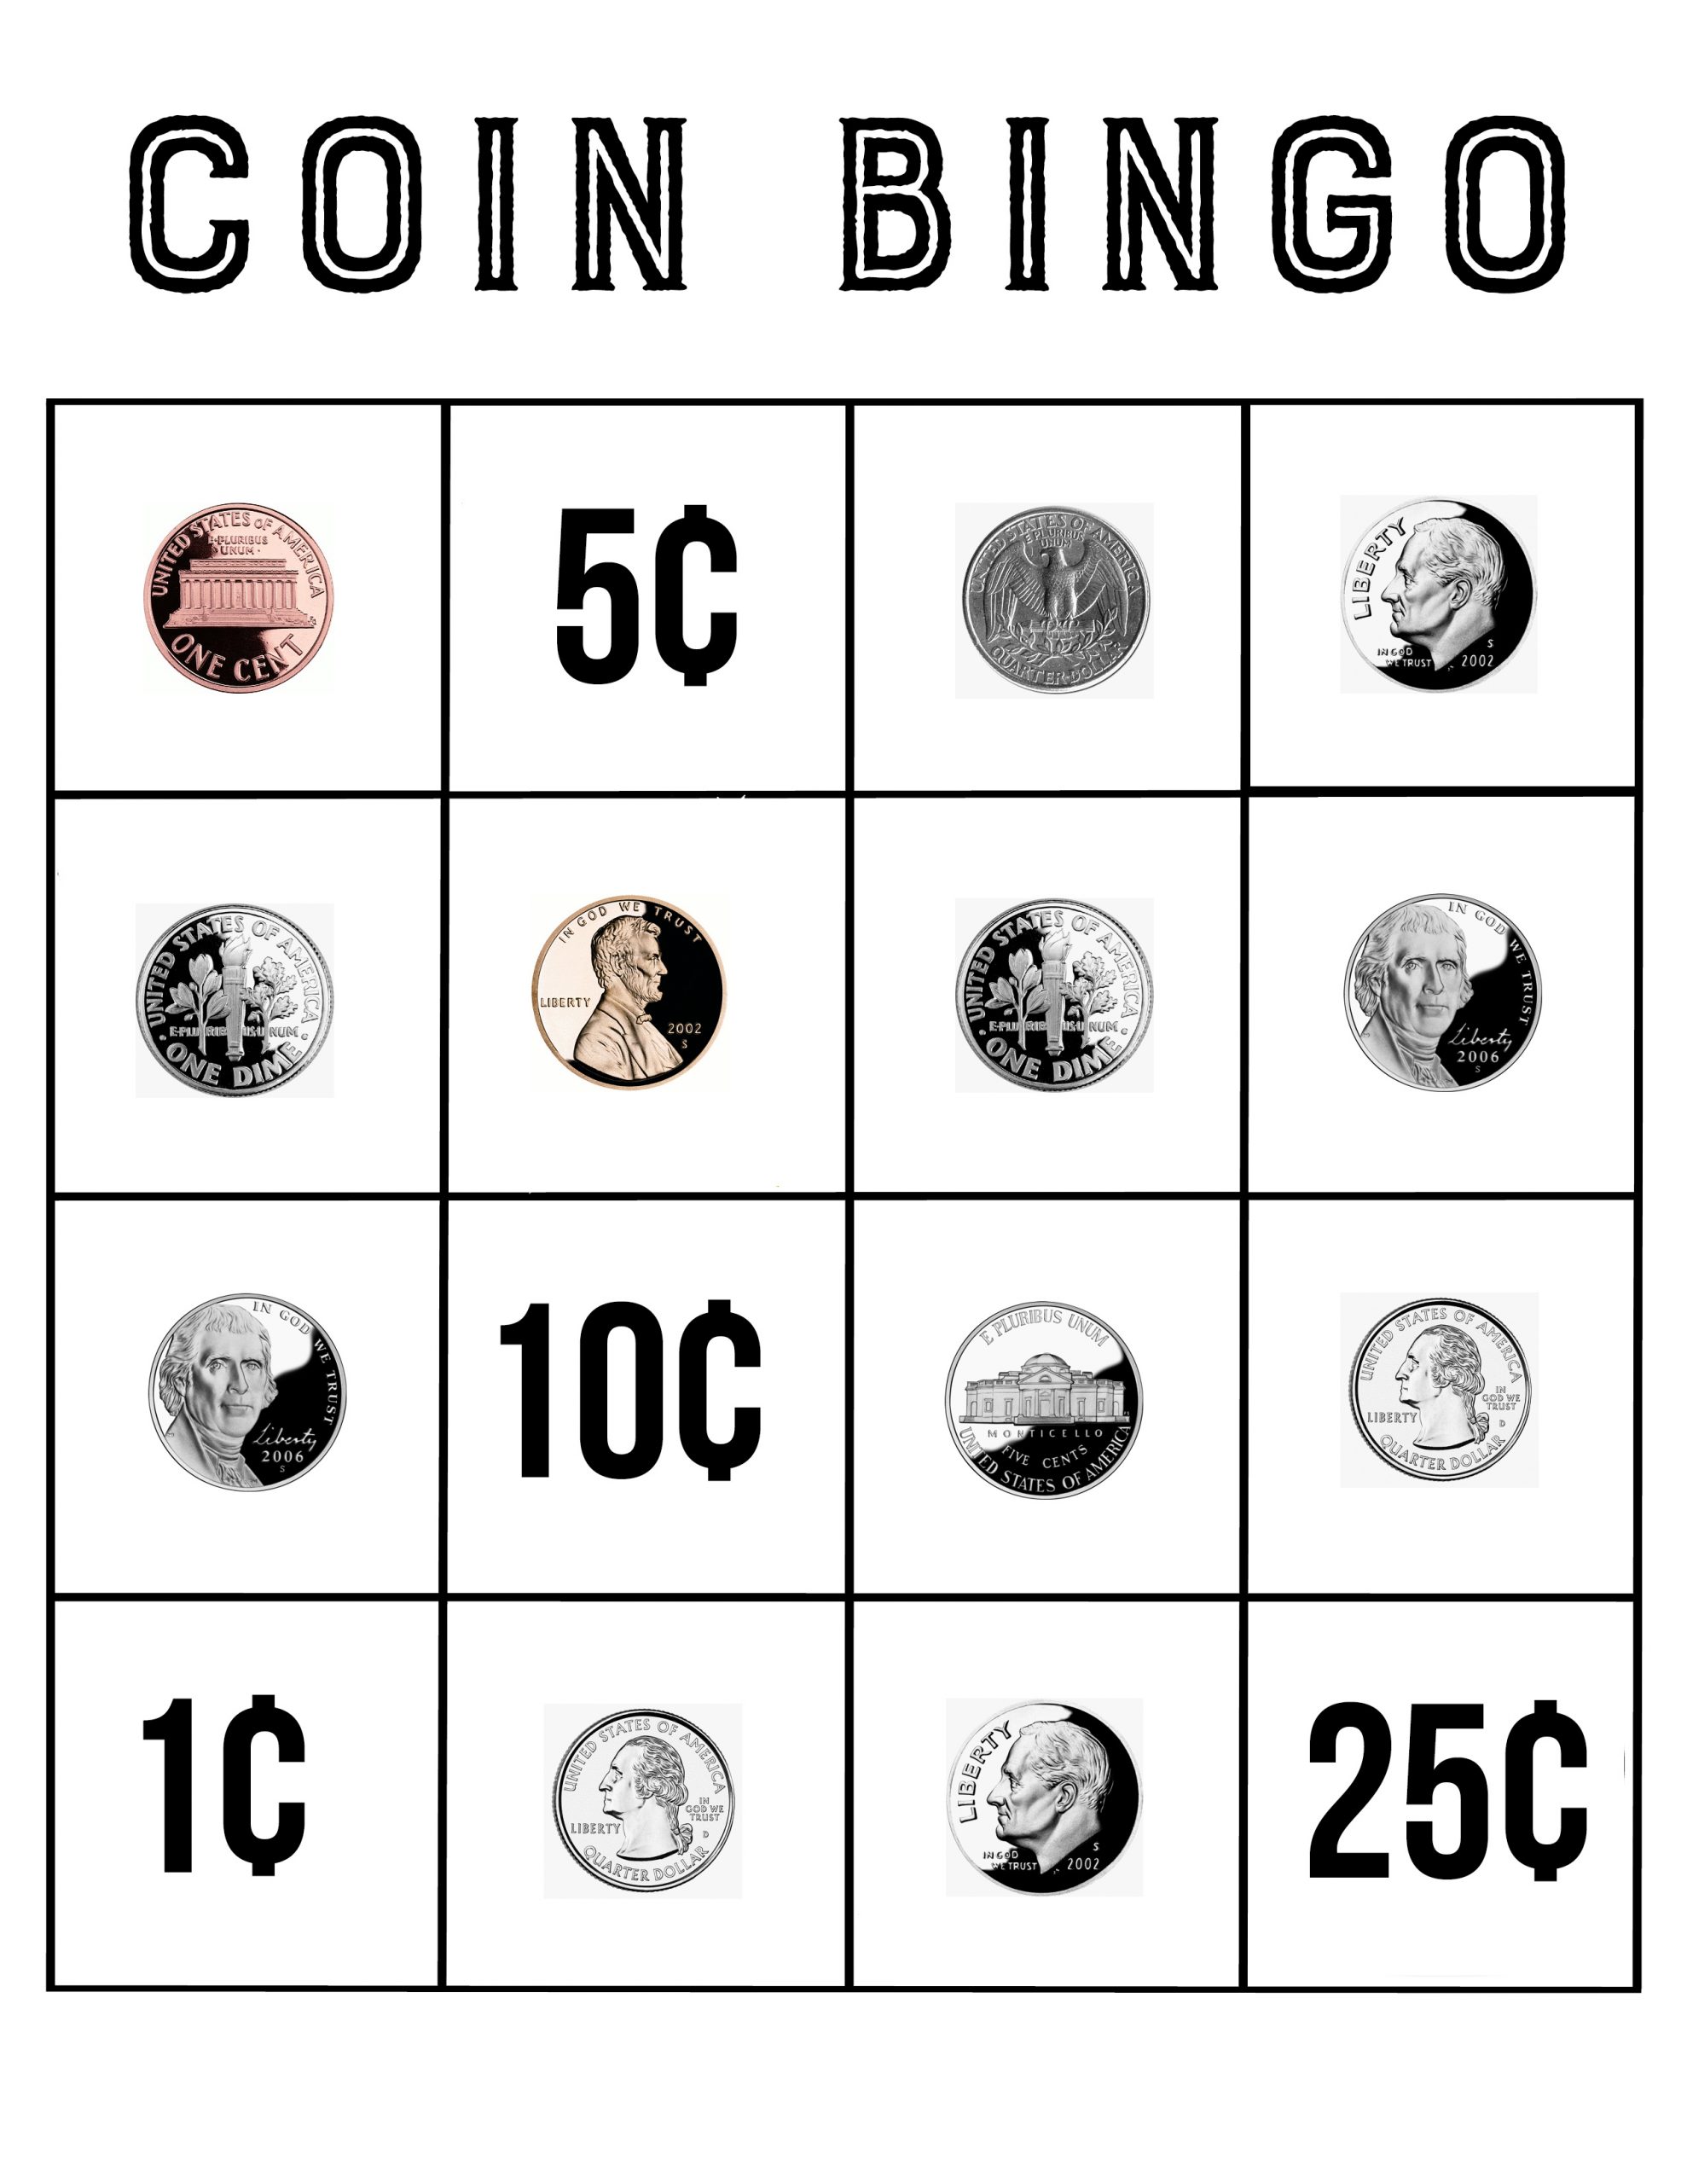 Bingo Money - How To Win Real Money Playing Bingo Games